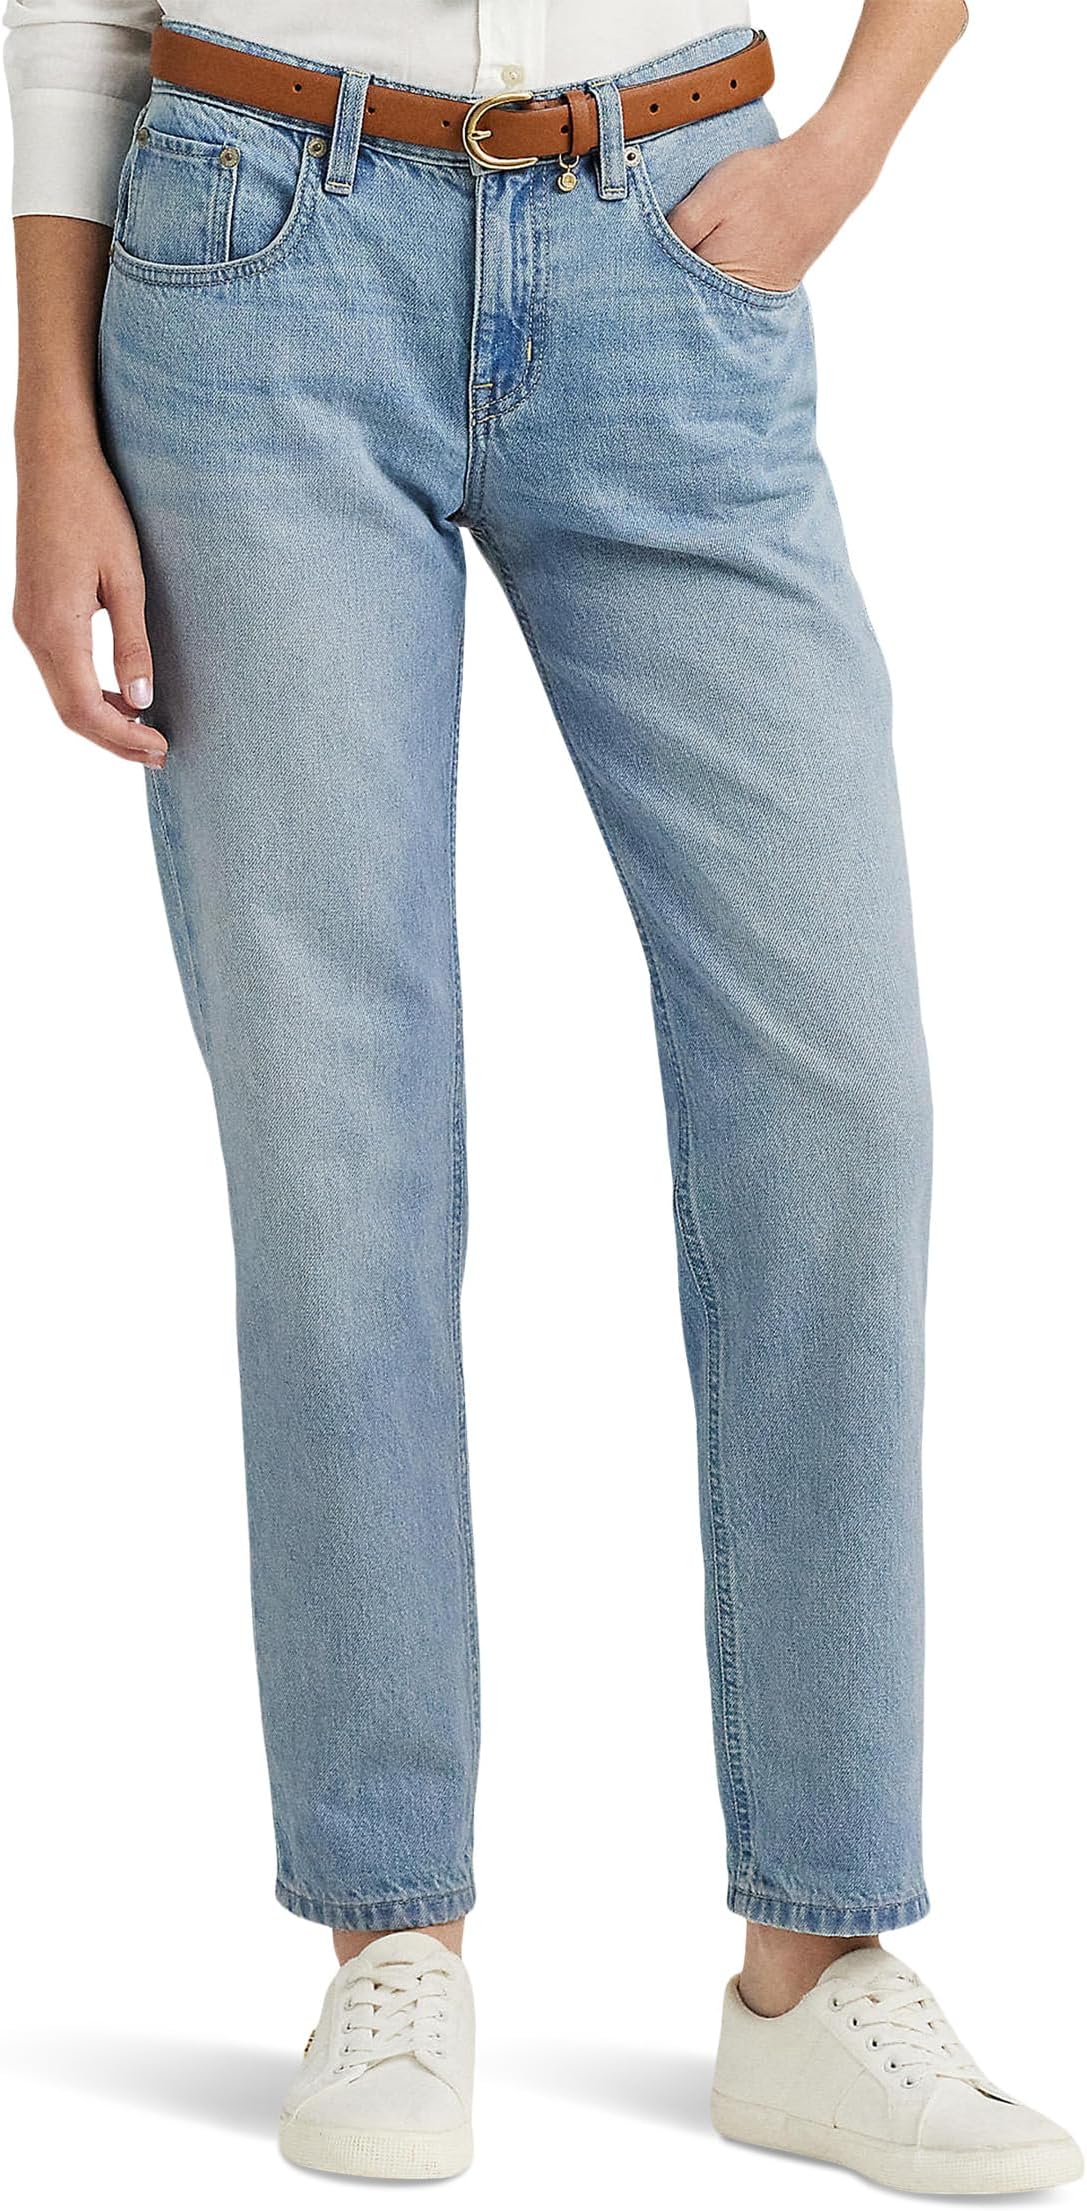 Джинсы Relaxed Tapered Ankle Jeans in Isla Wash LAUREN Ralph Lauren, цвет Isla Wash